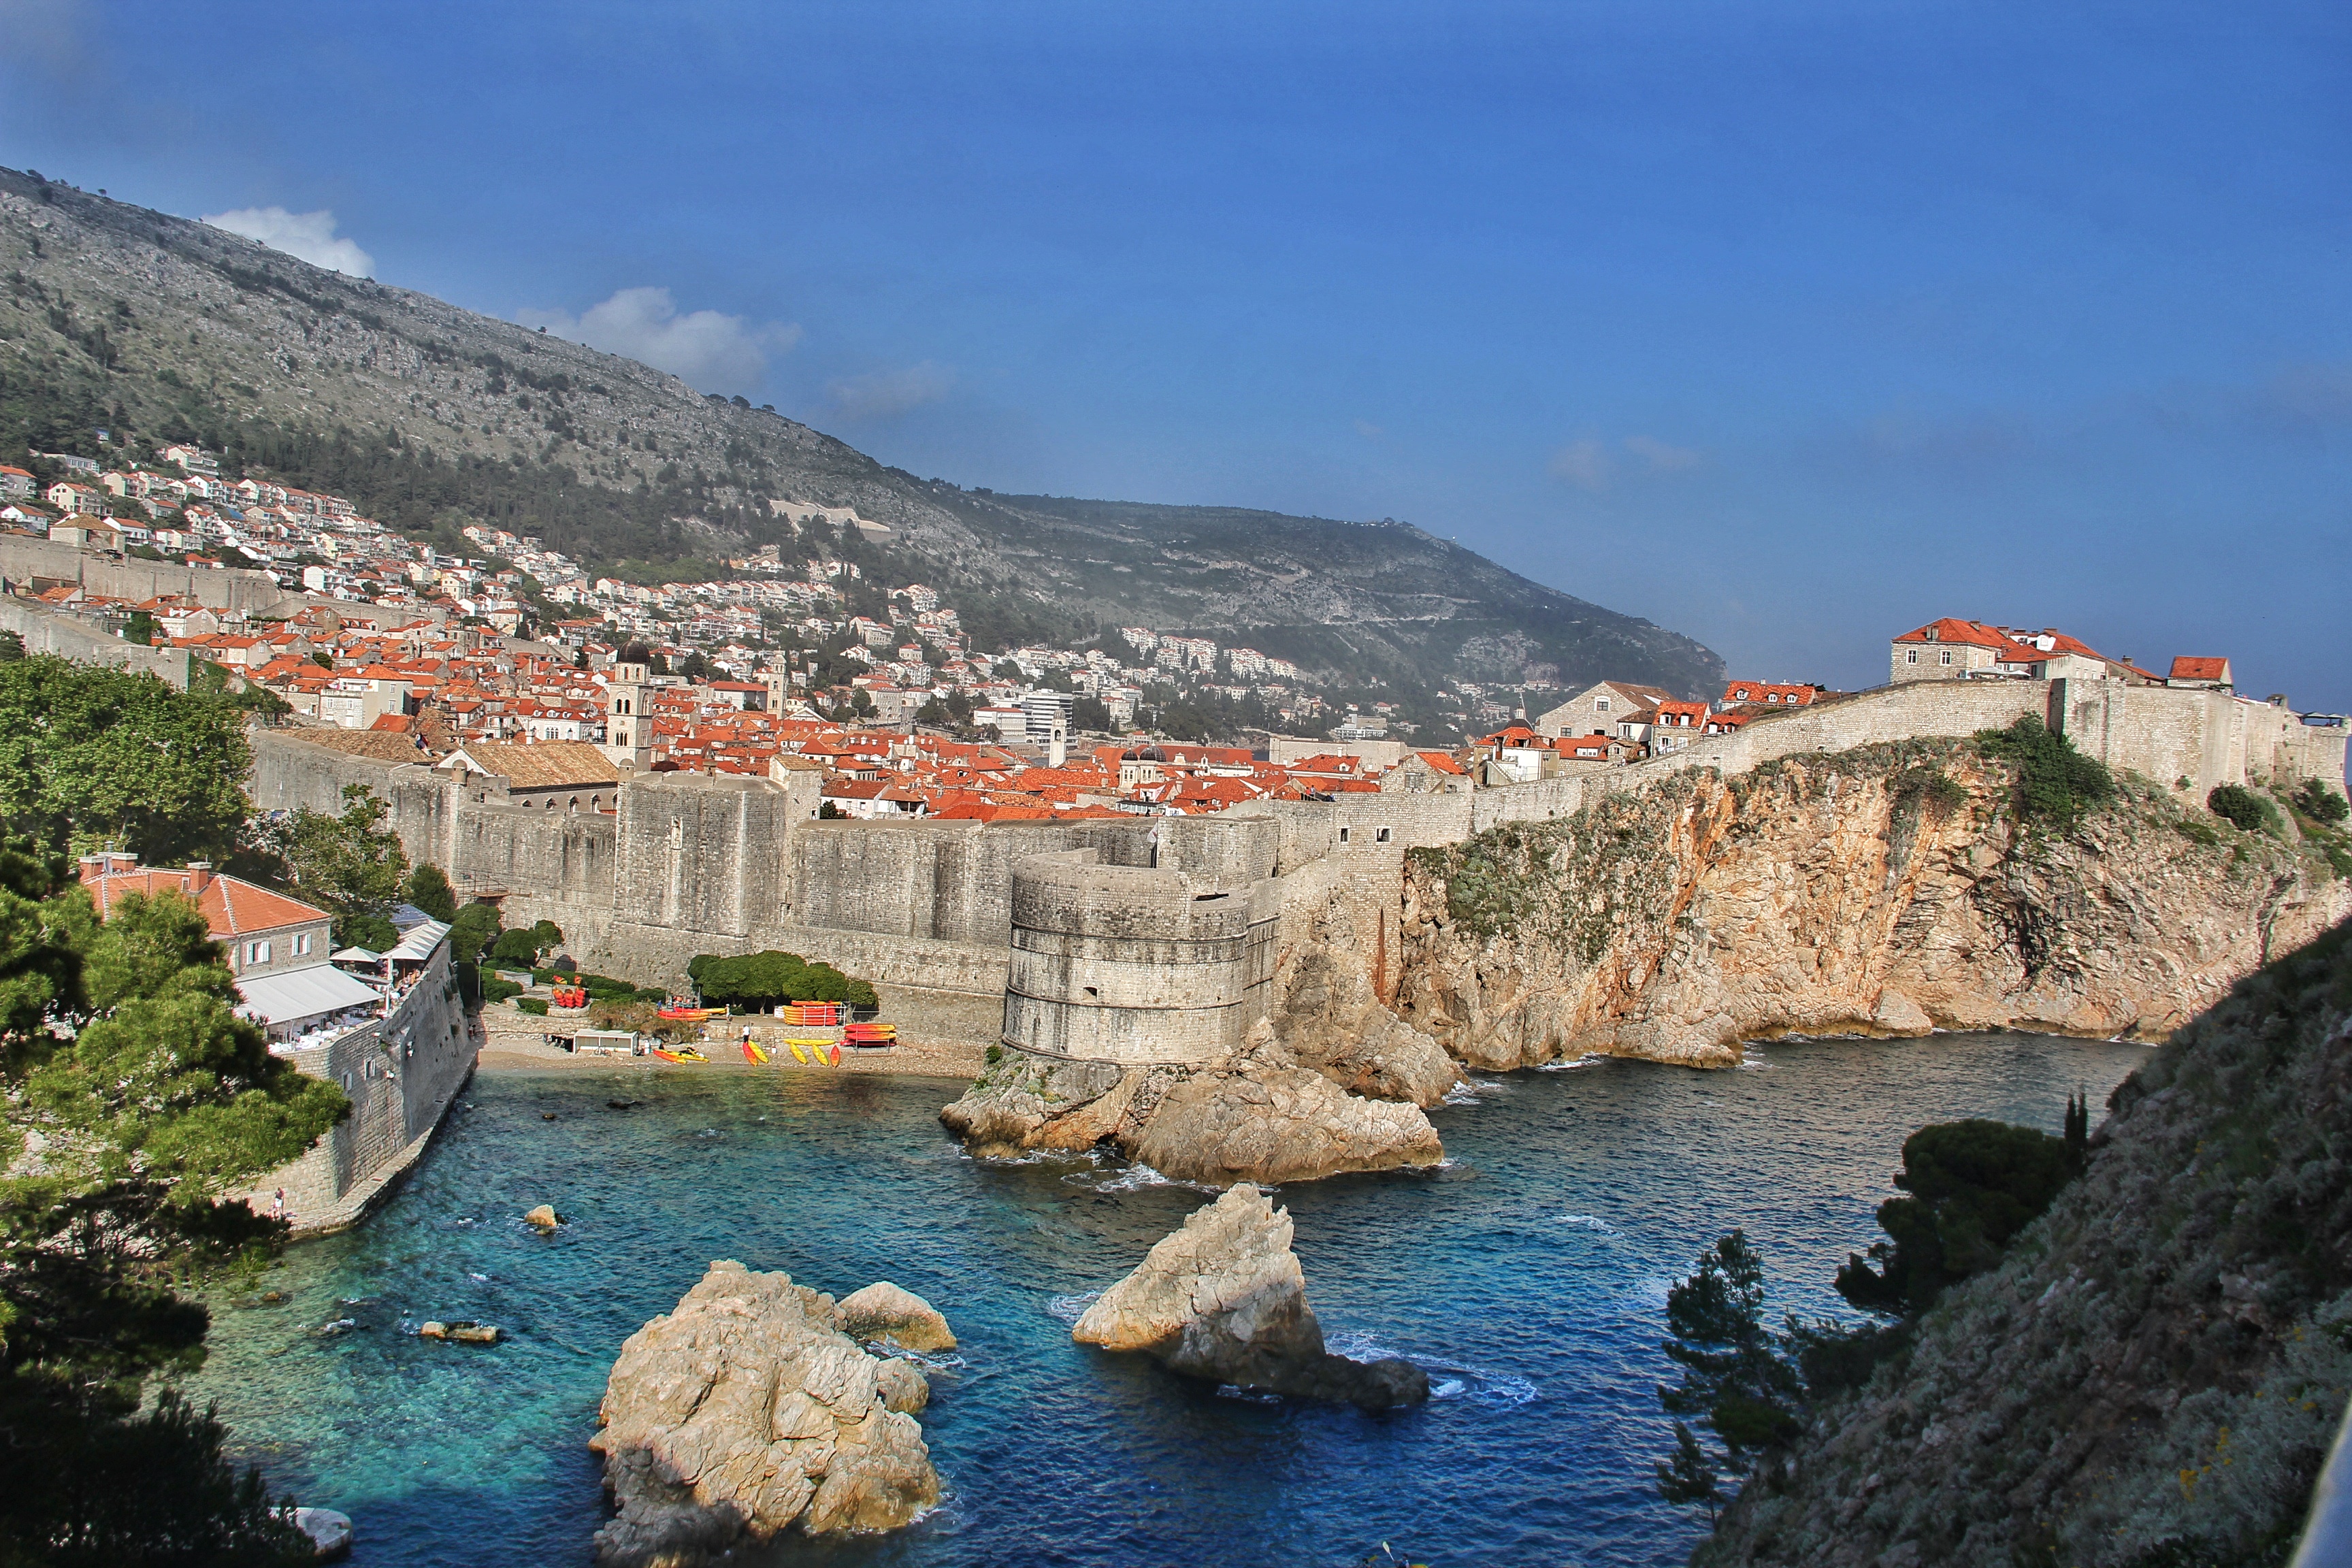 I am in Dubrovnik